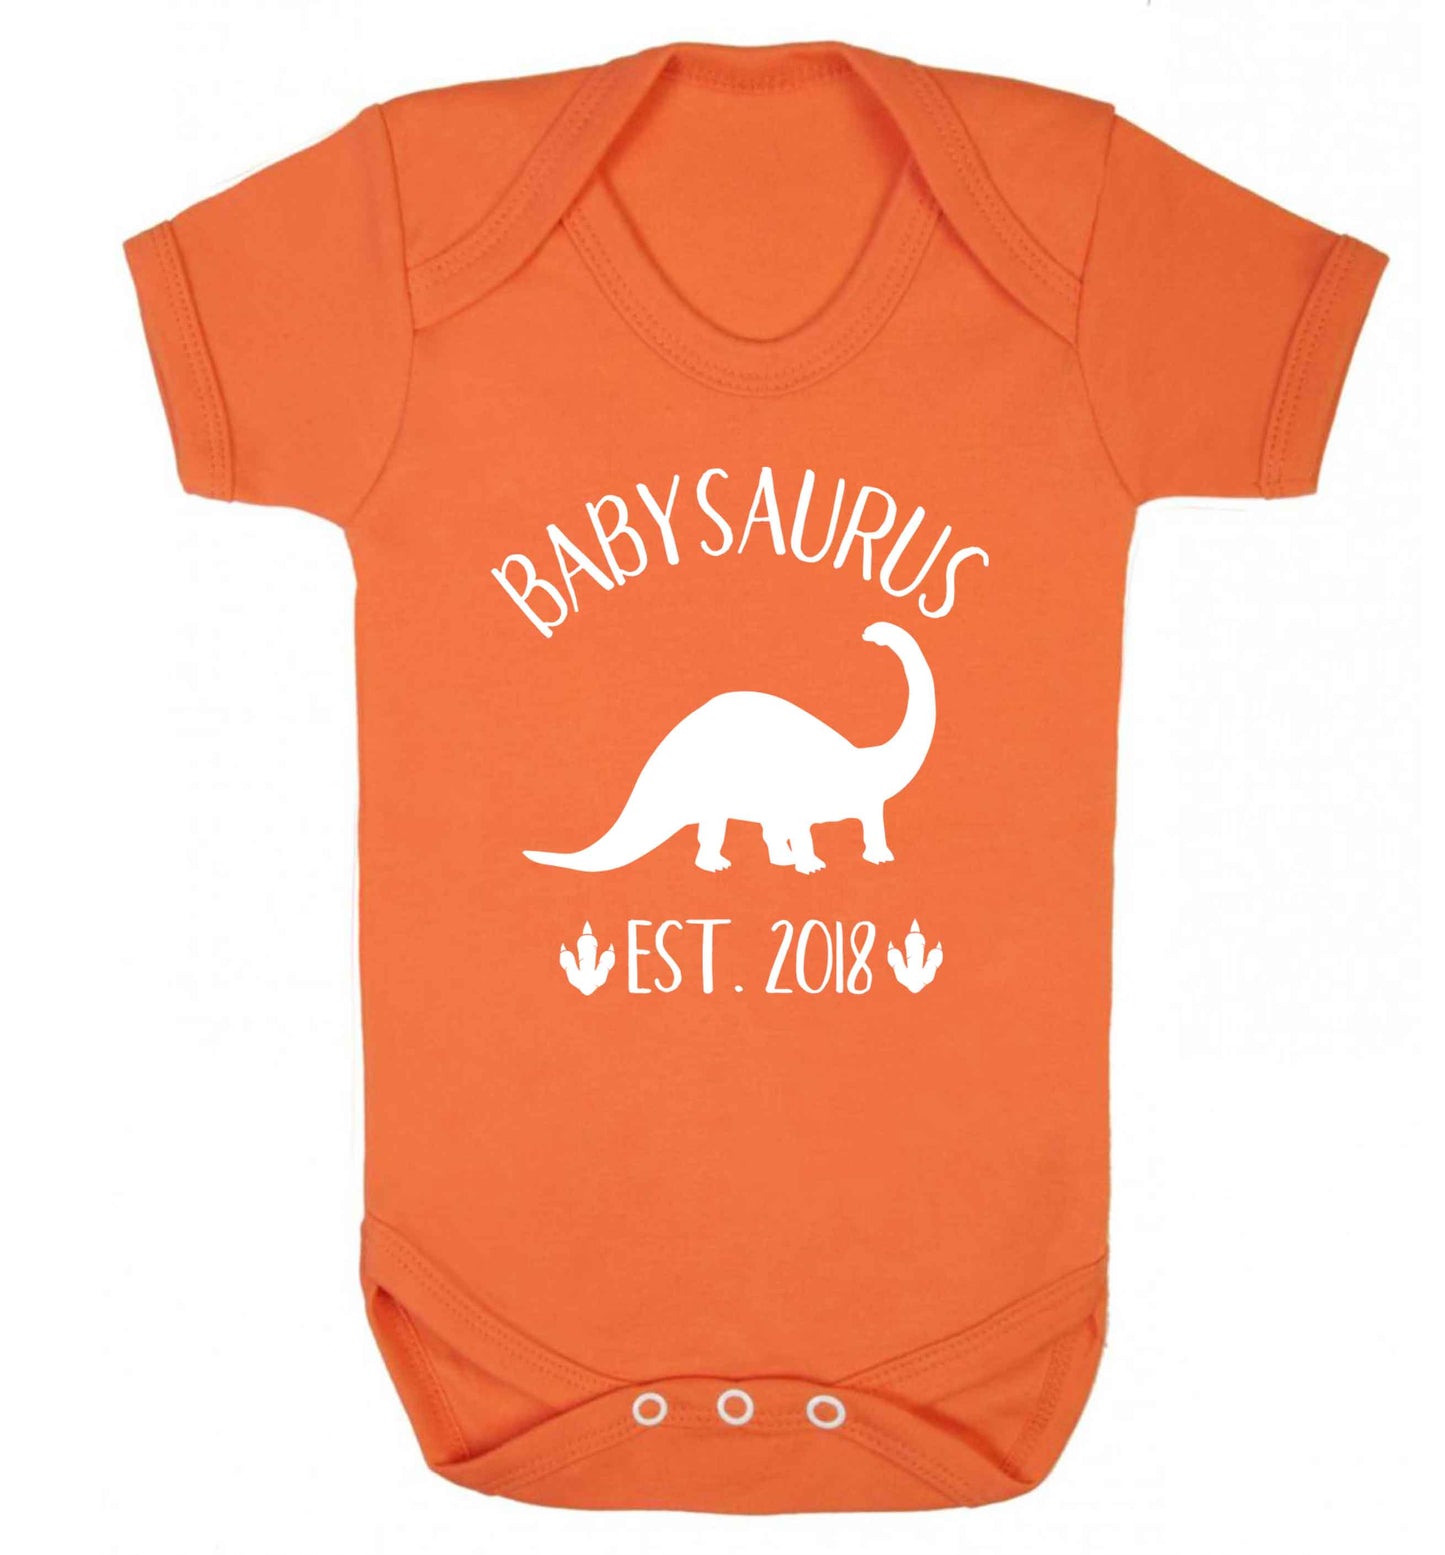 Personalised babysaurus since (custom date) Baby Vest orange 18-24 months